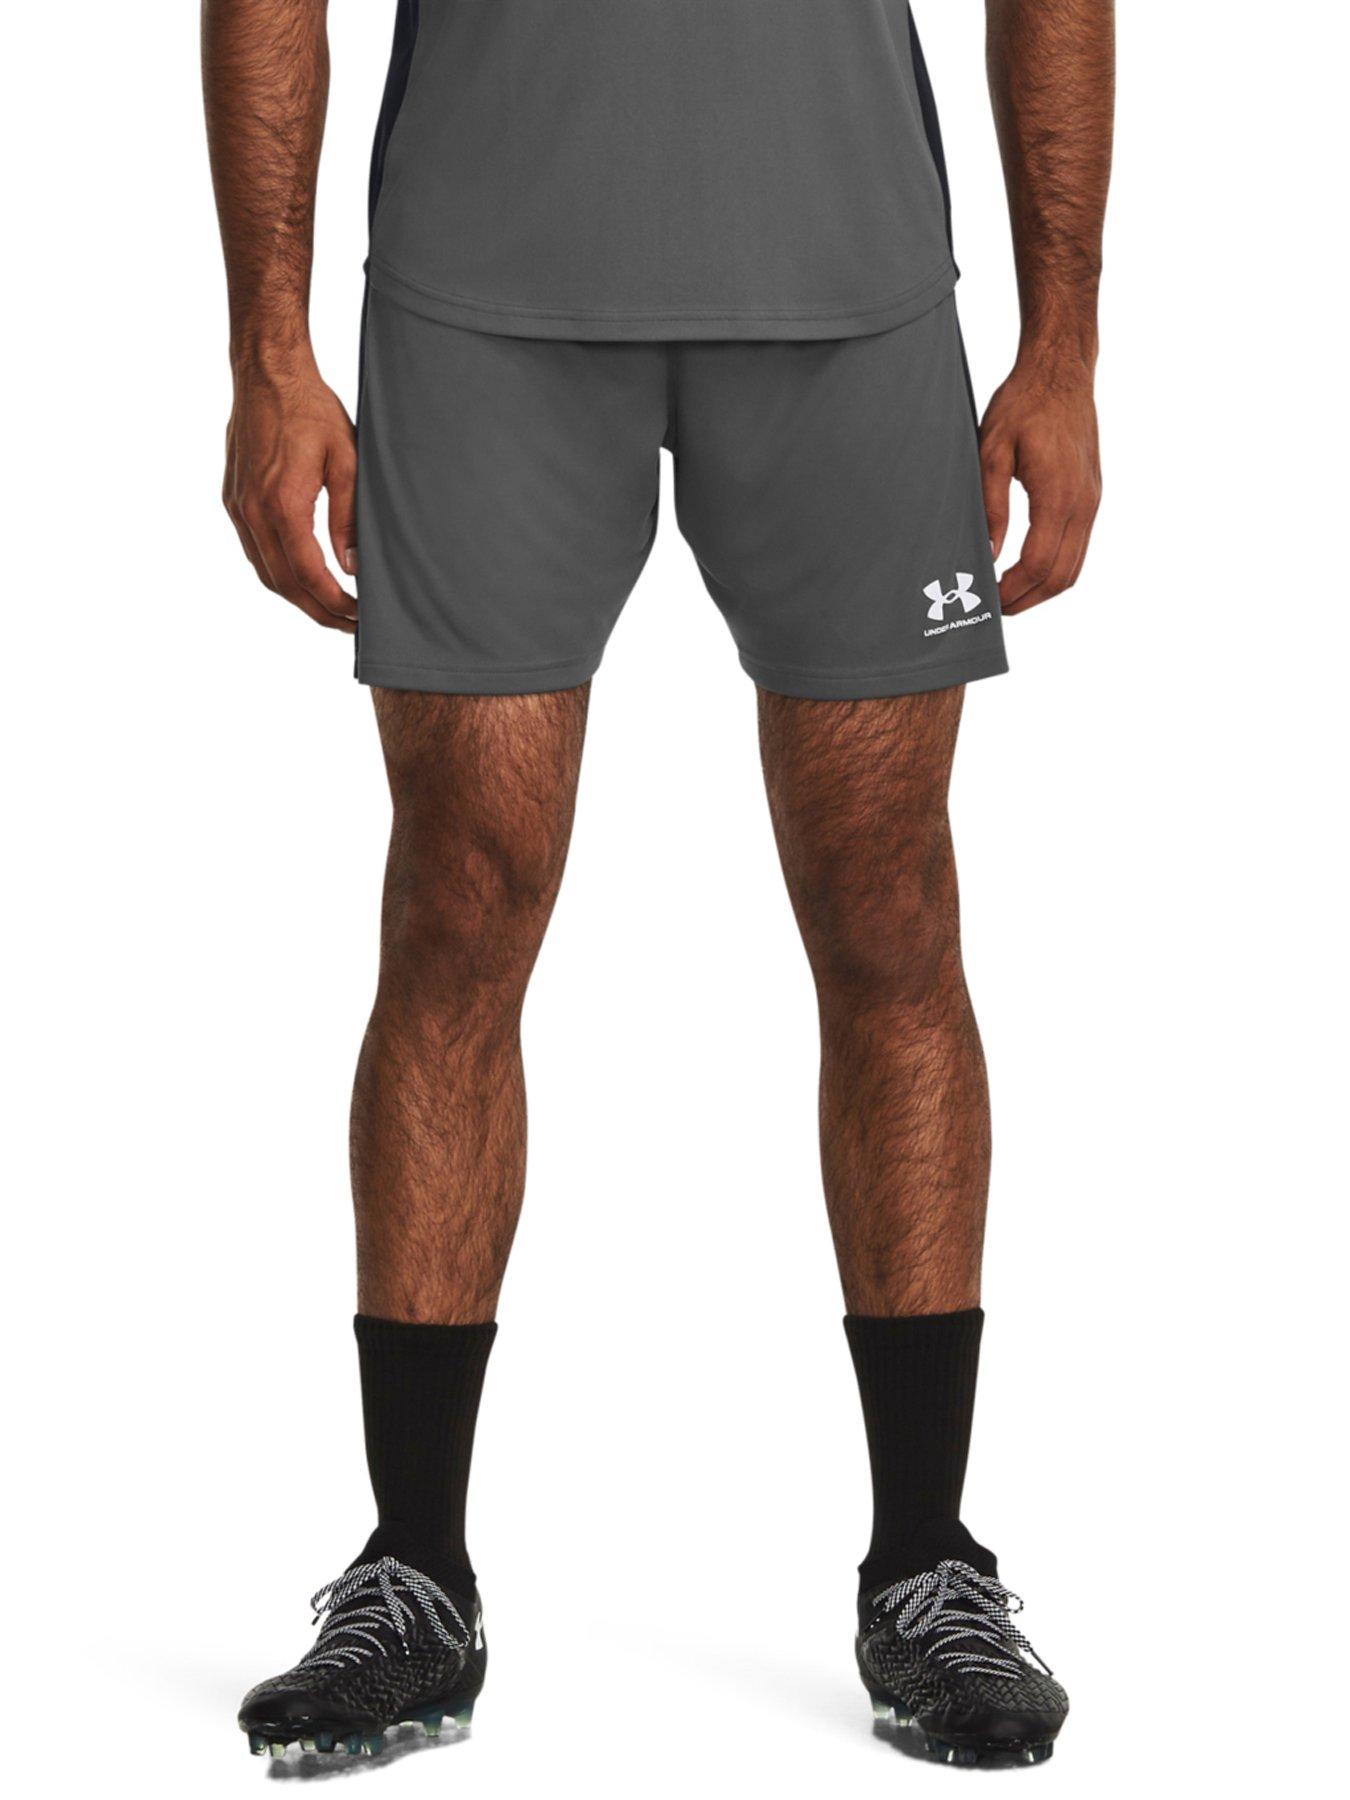 UNDER ARMOUR Challenger Shorts - Grey, Grey, Size S, Men